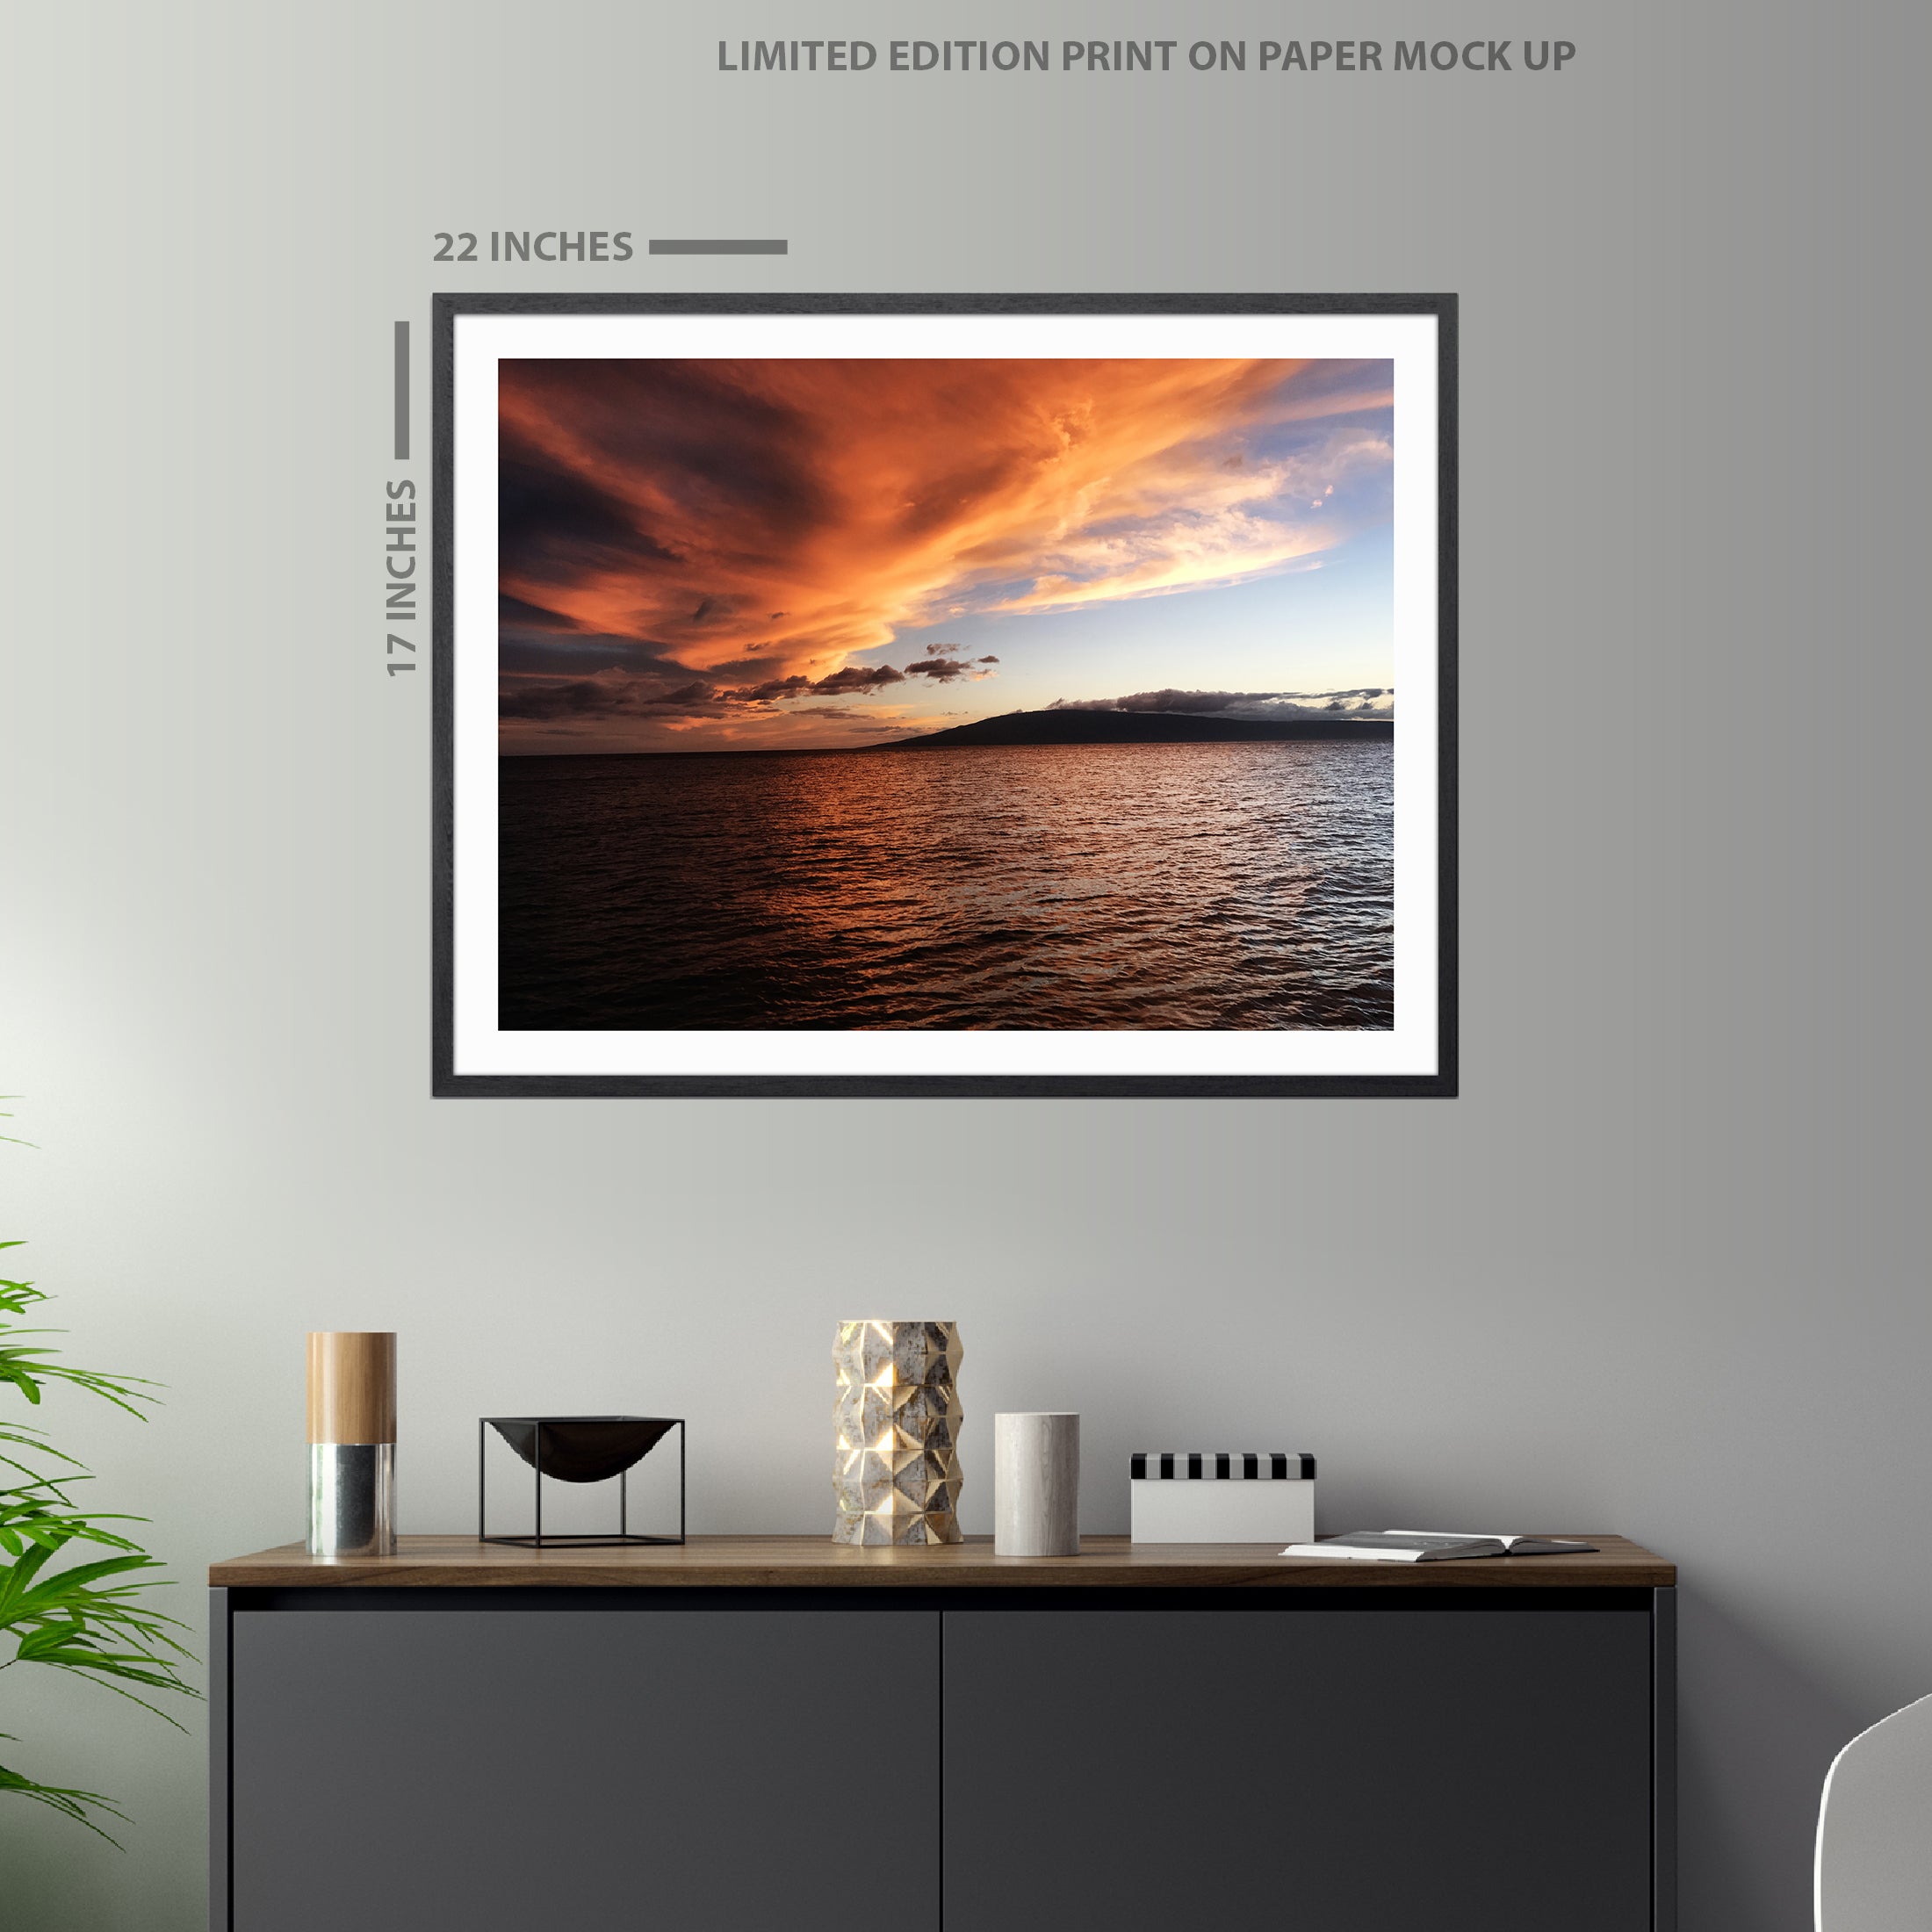 Maui Sunset 3.0, Limited Edition Print